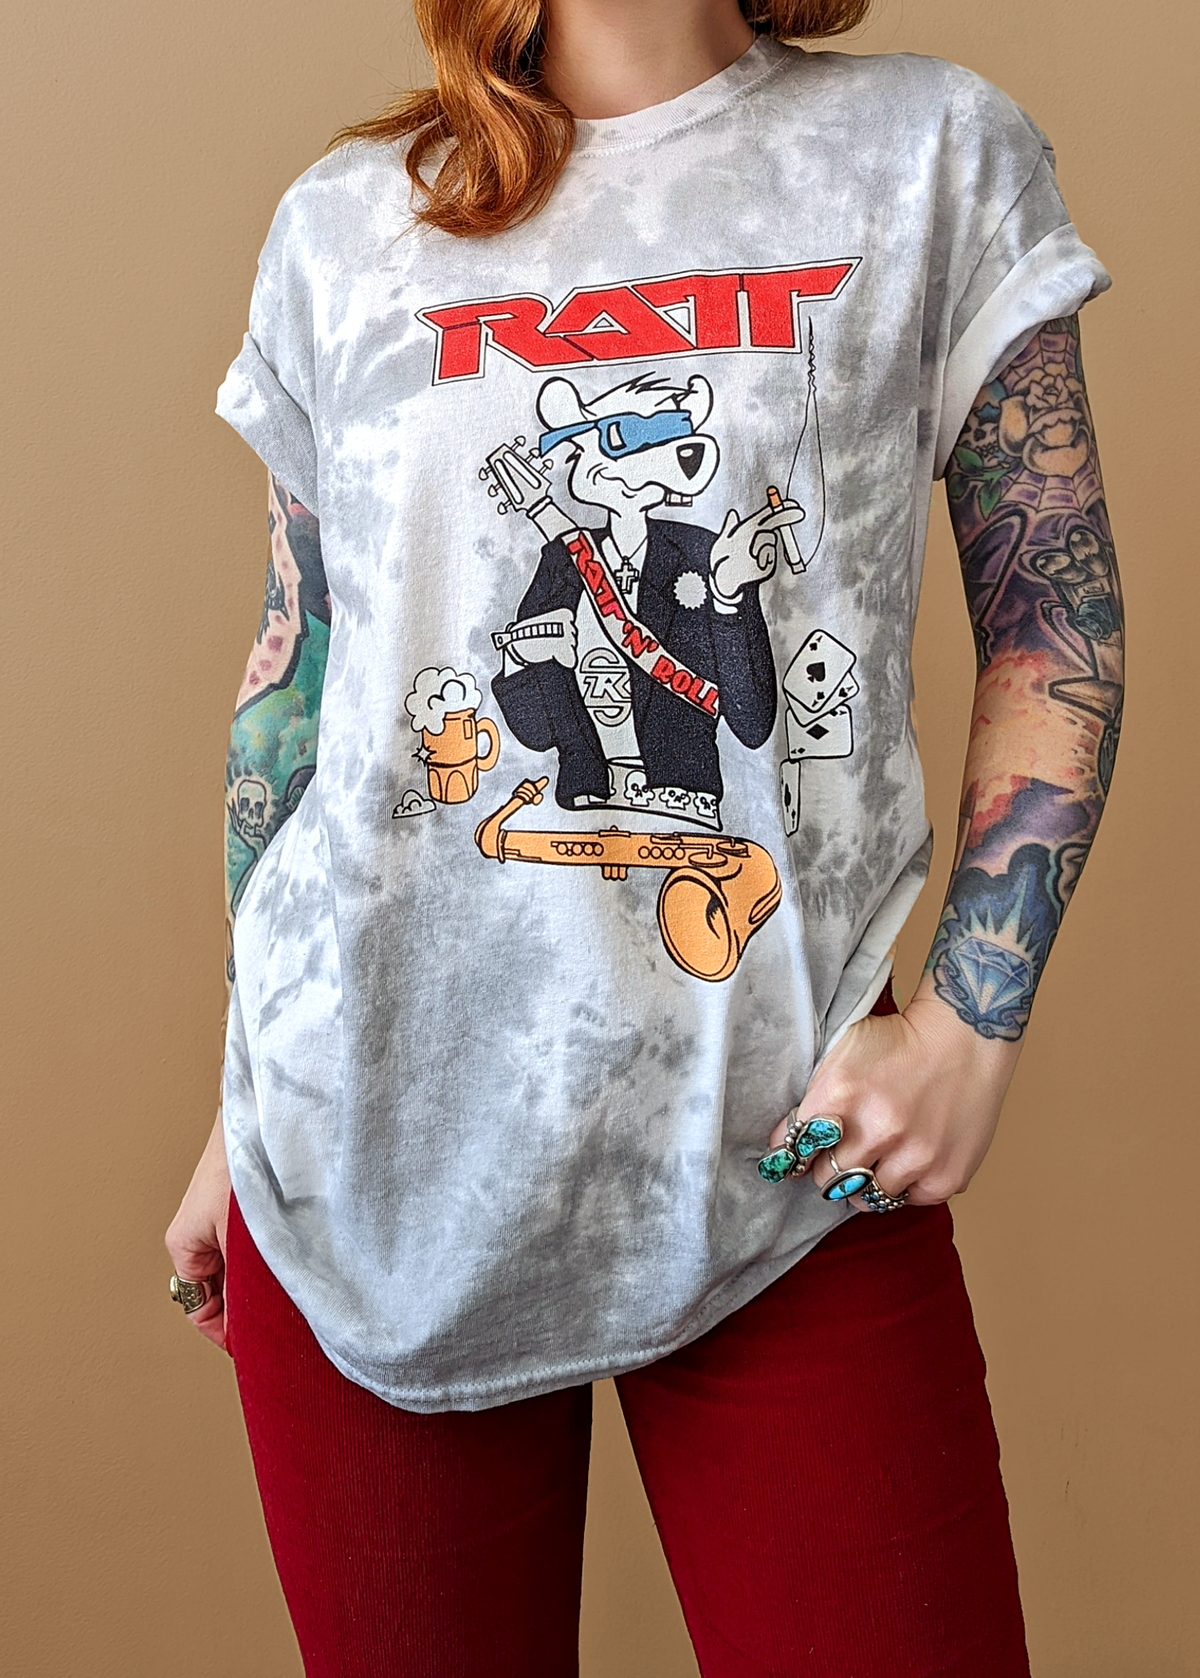 Daisy Street Oversized Unisex heavy metal '80s inspired Ratt Ratt N Roll mineral wash tee